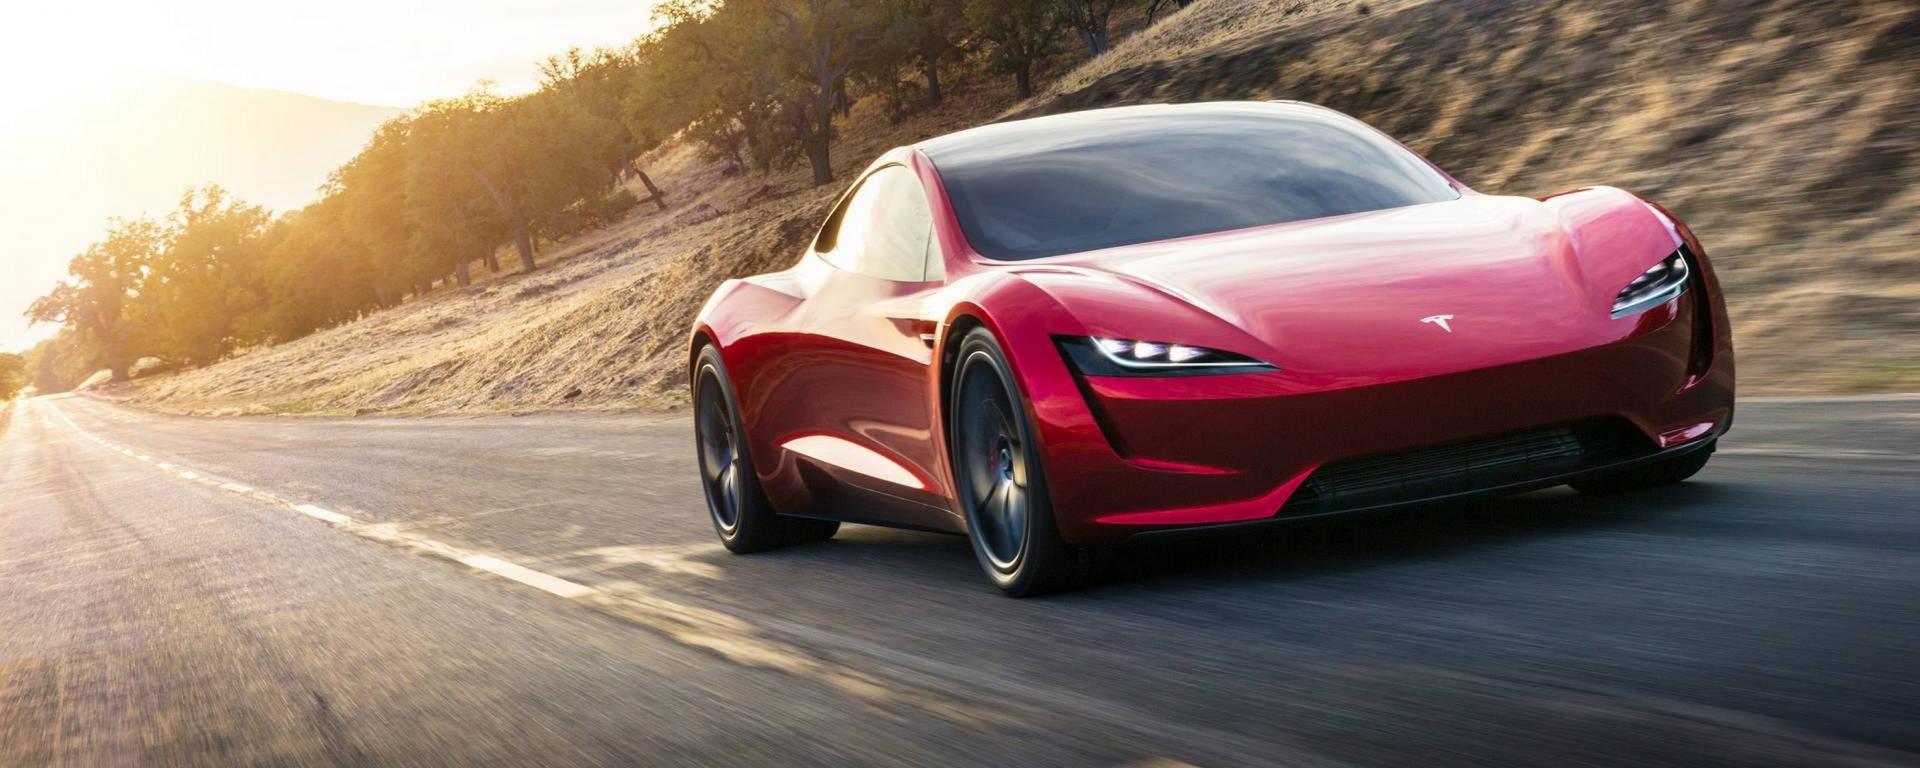 Tesla roadster 2020